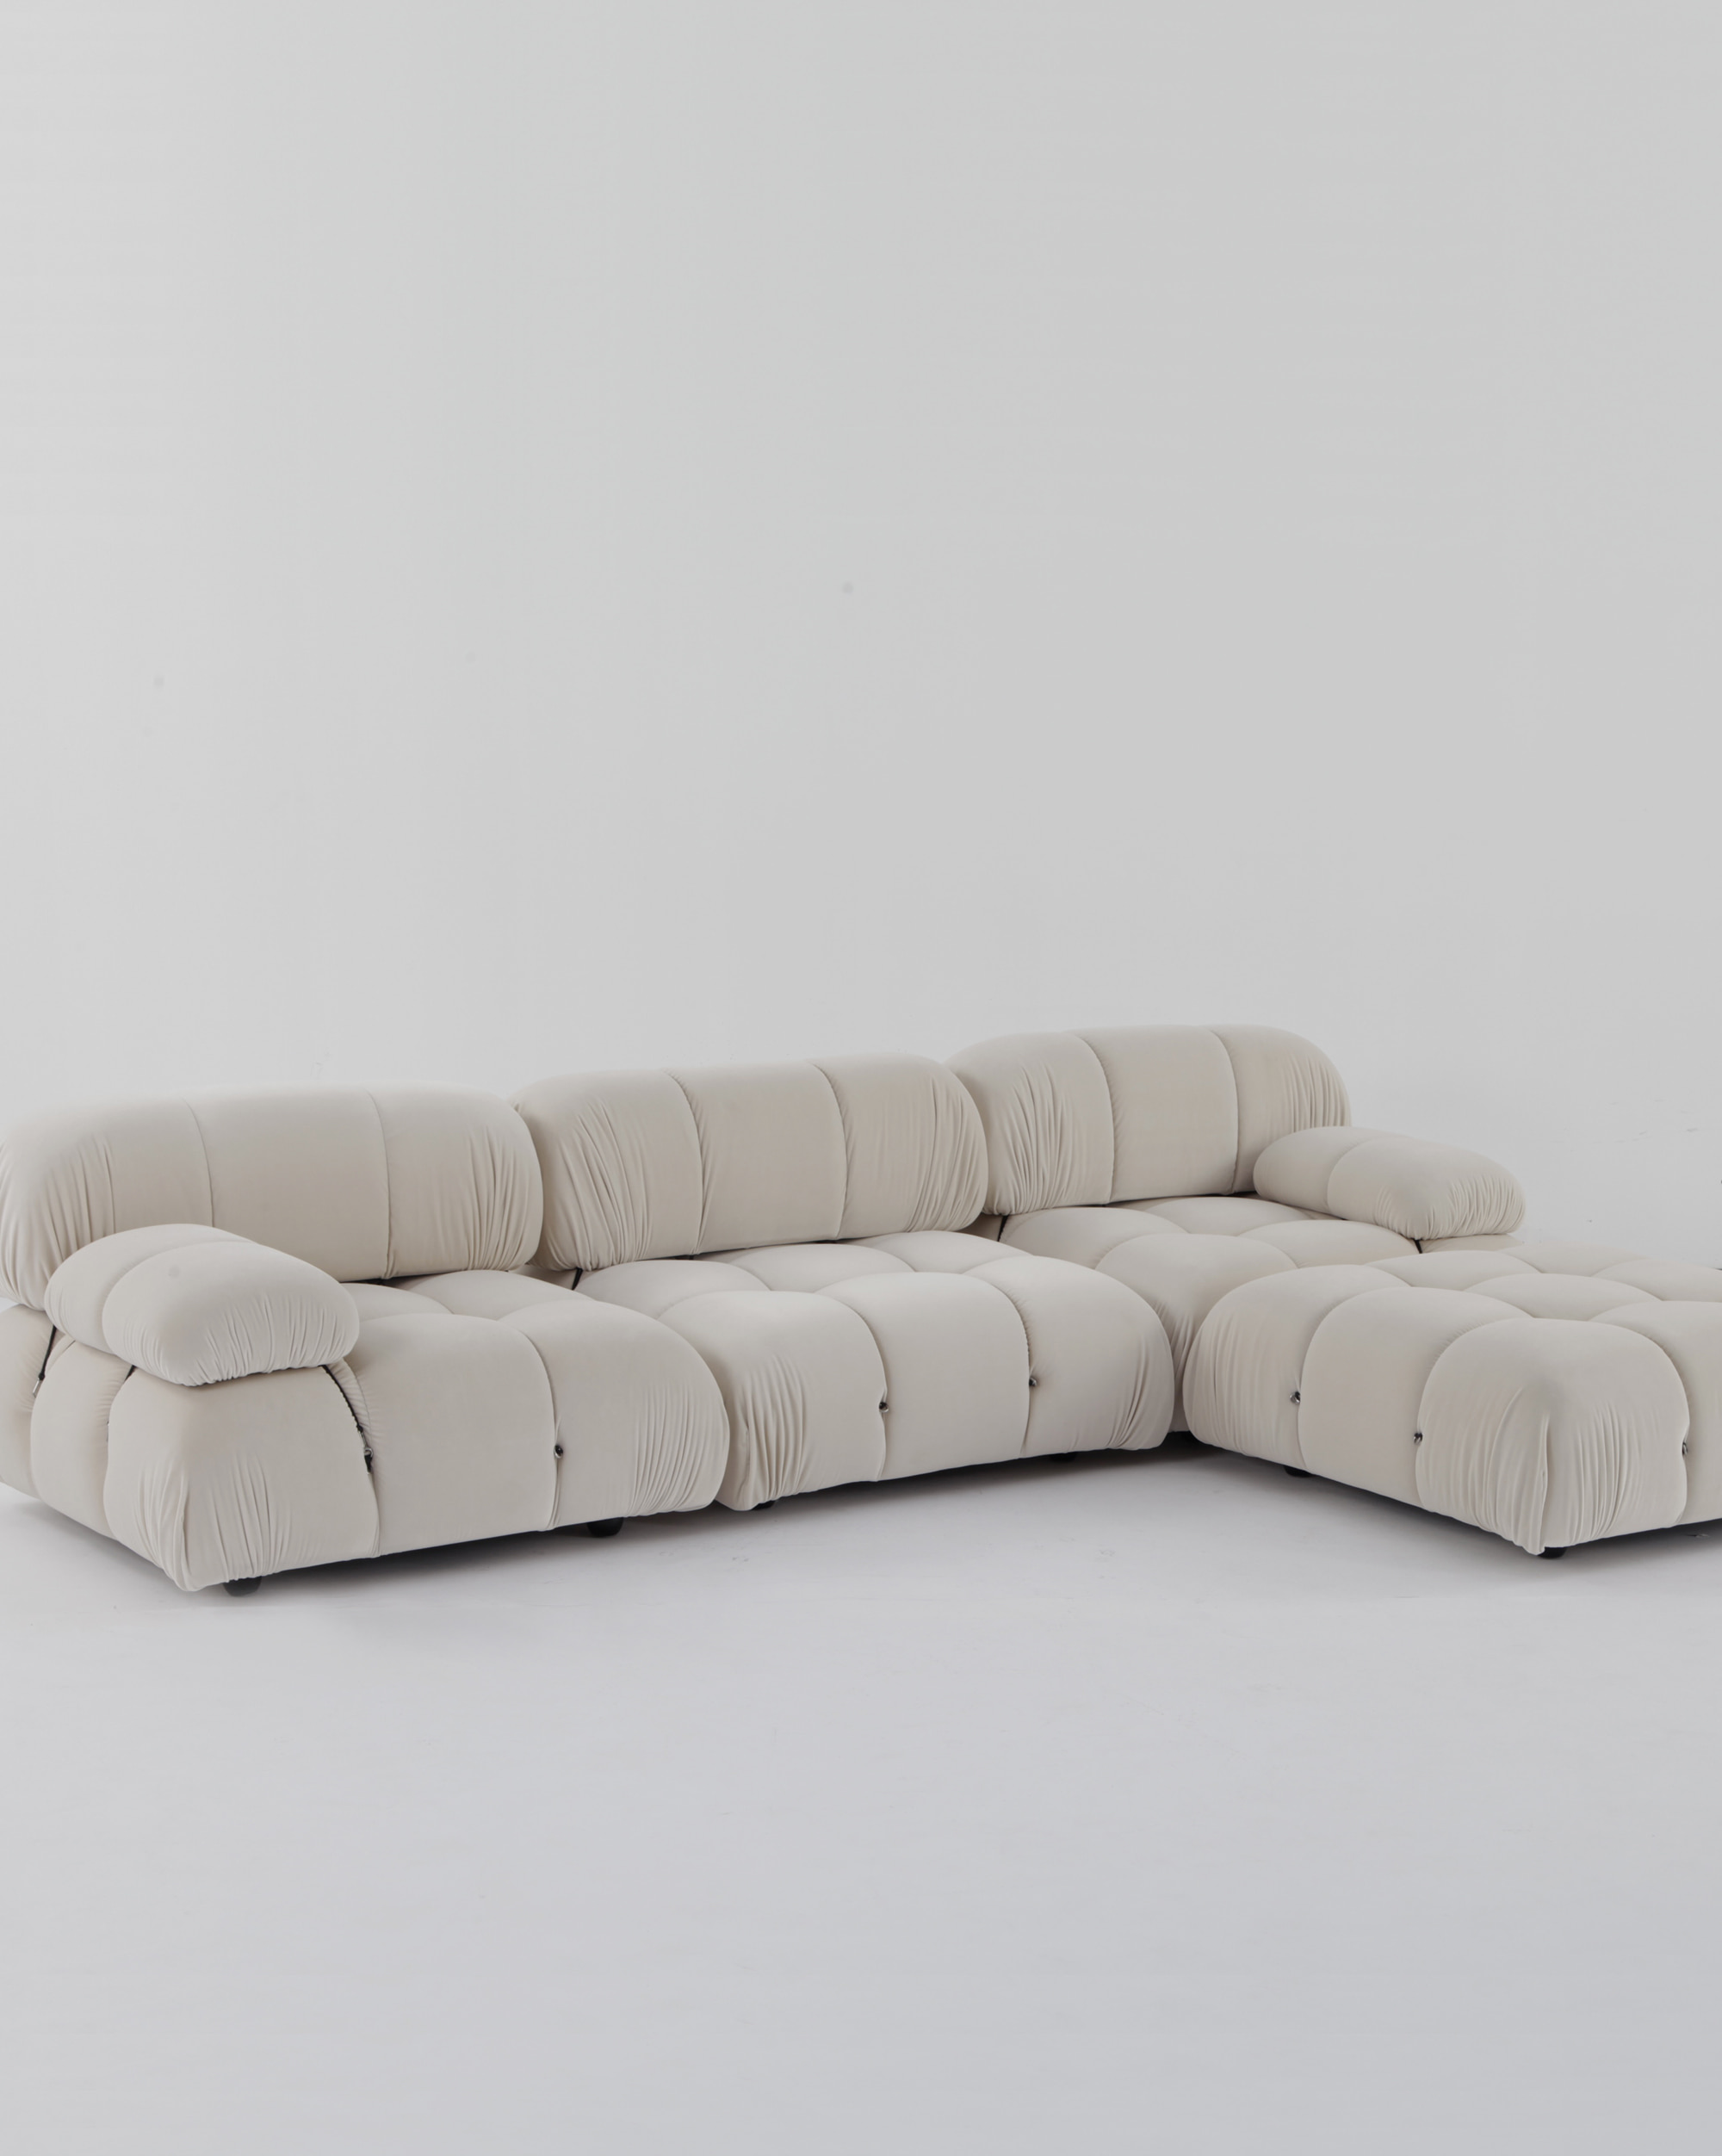 Flowing Furniture, SOBOLO sofa.